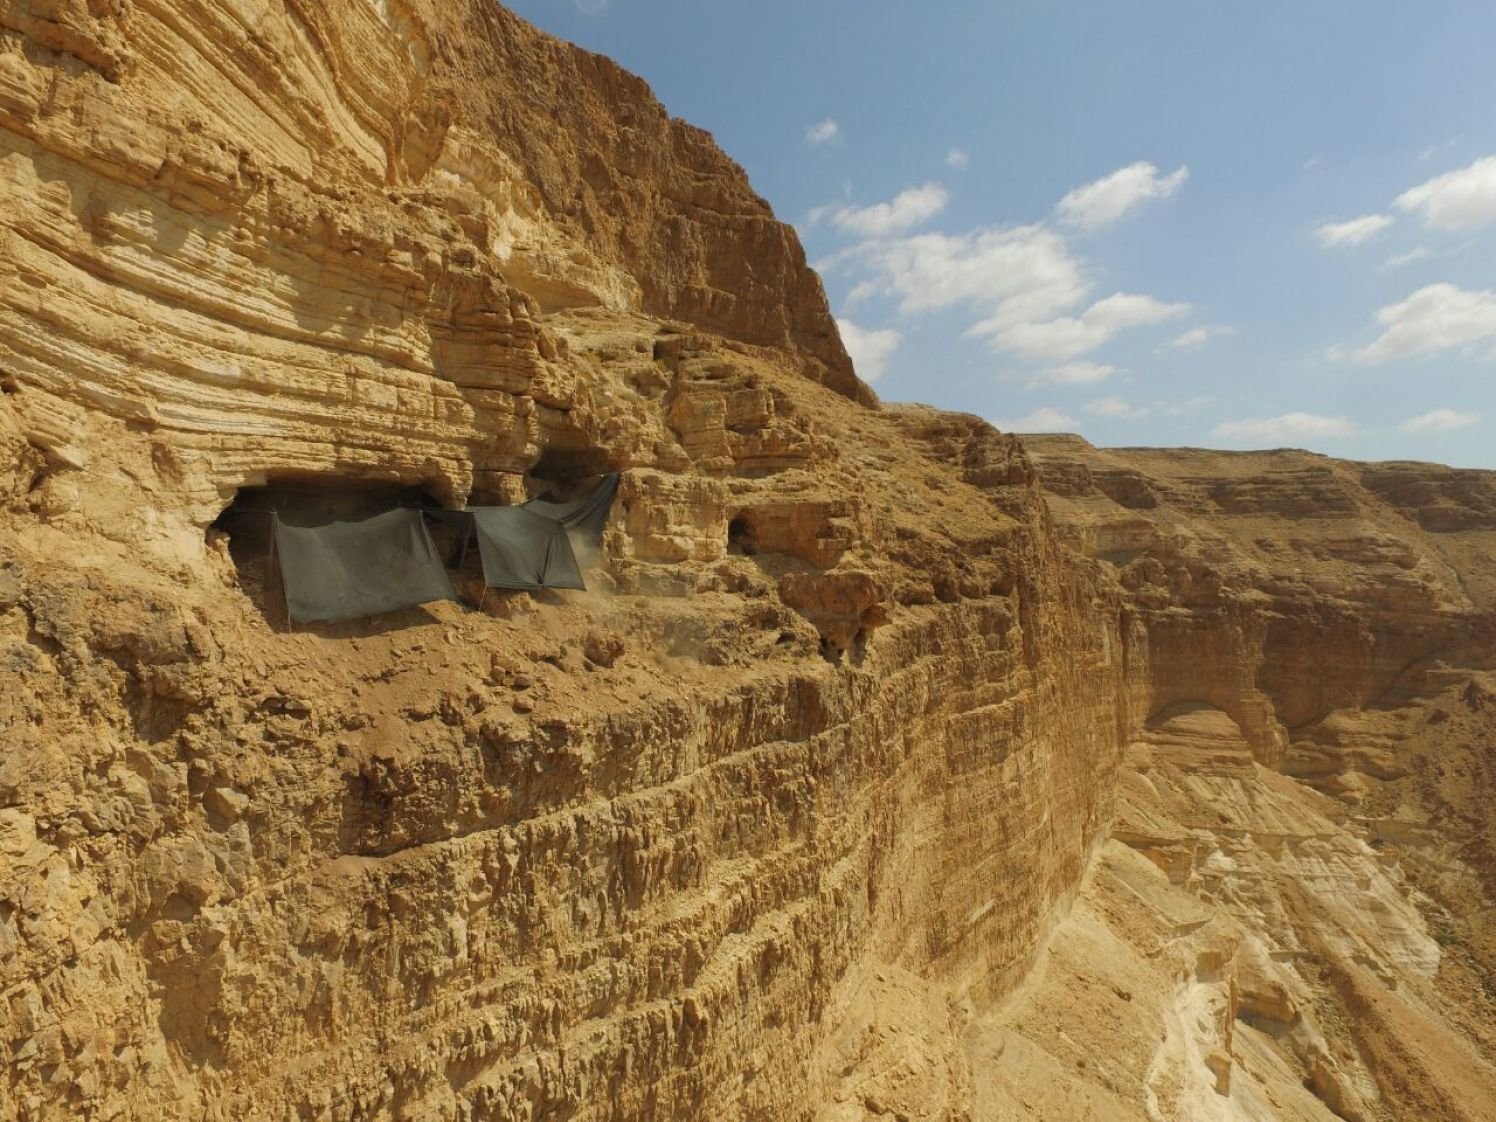 The Cave of Skulls in the Judean Desert